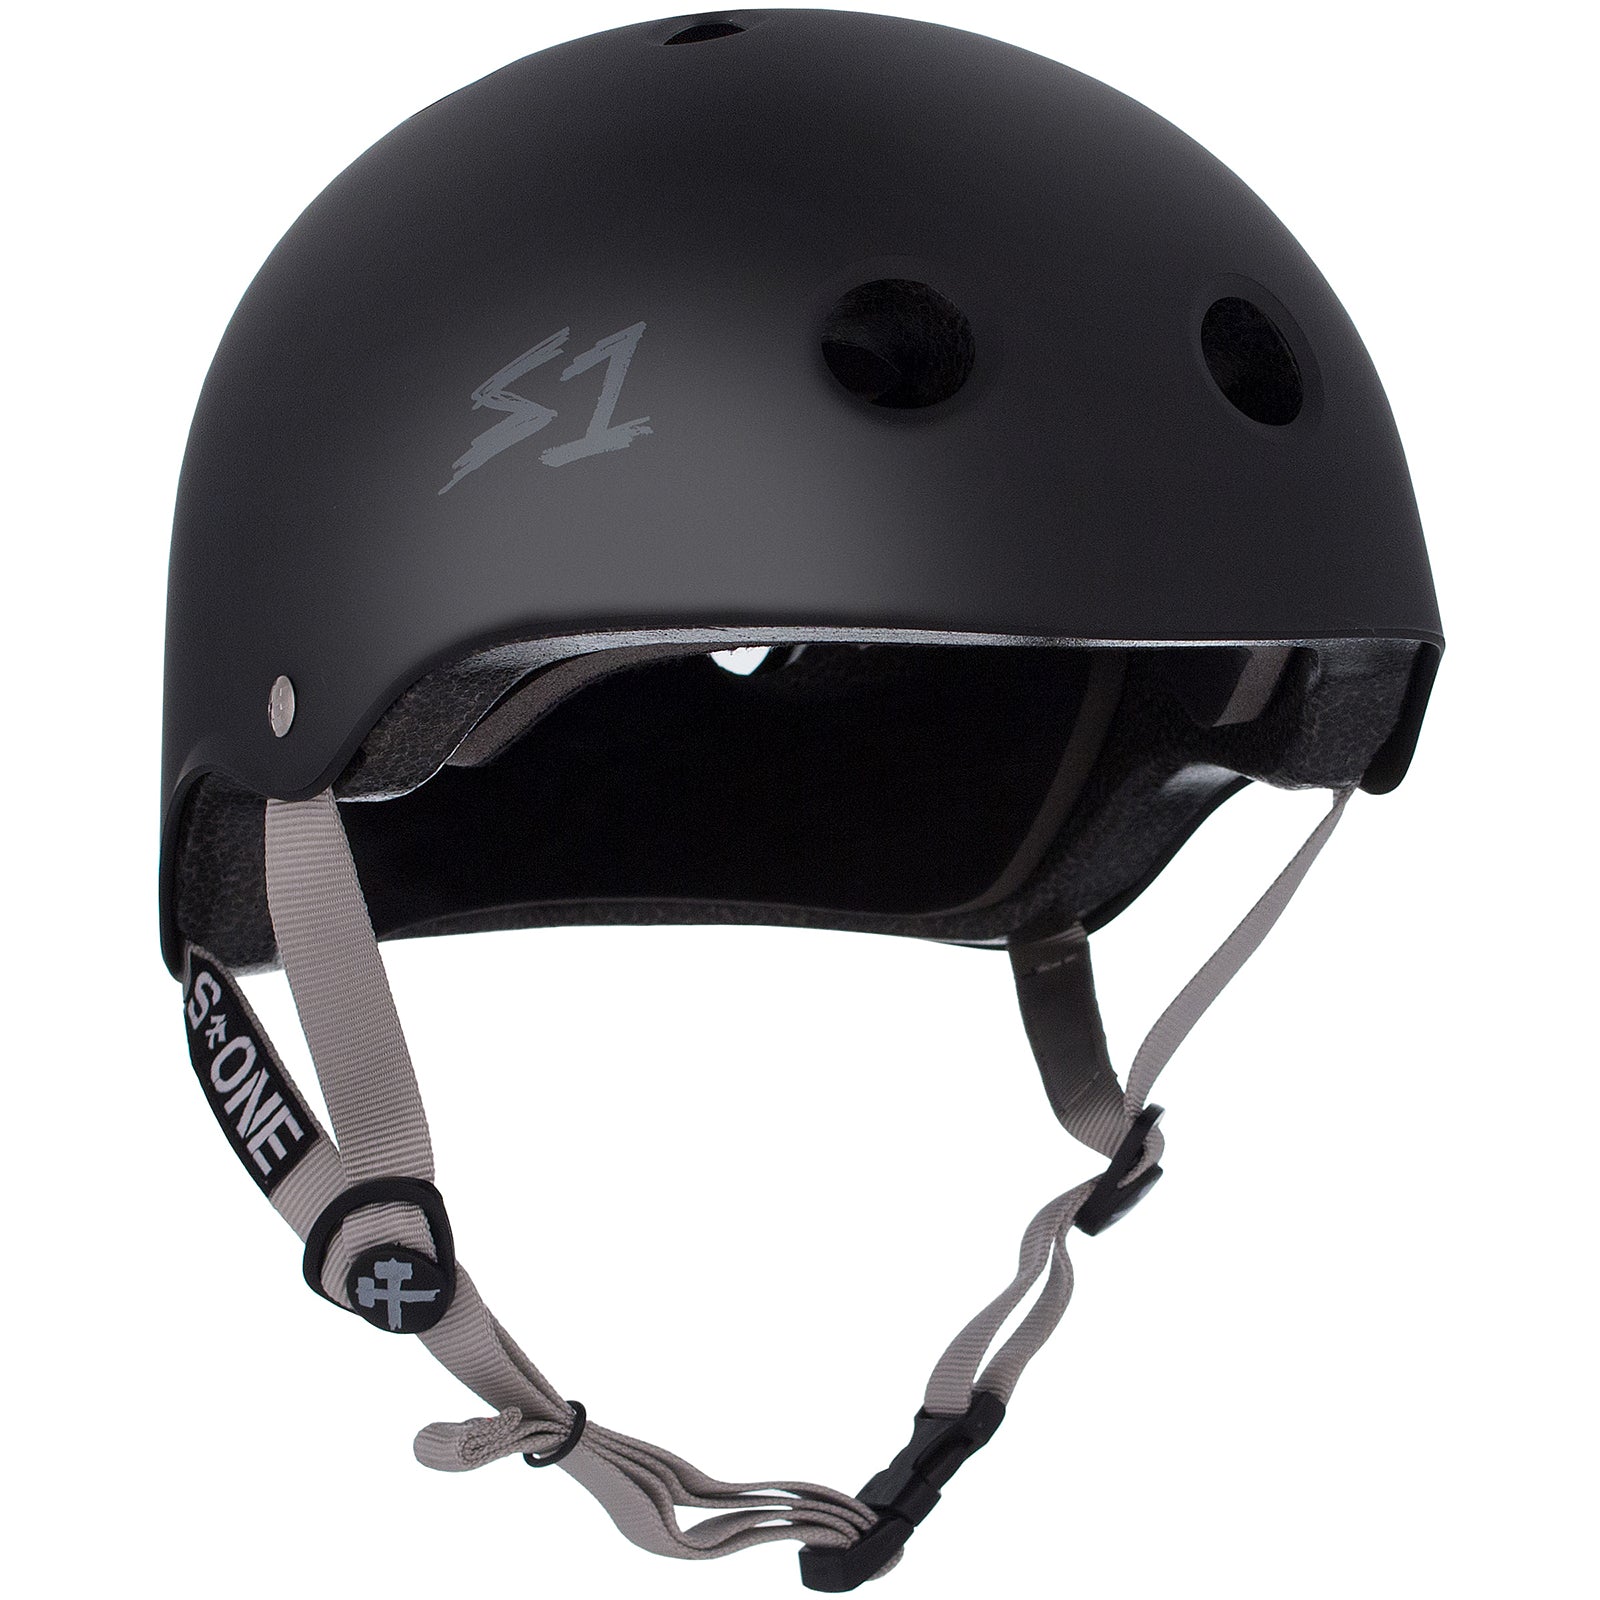 S1 Lifer Helmet - Mast black helmet with gray straps